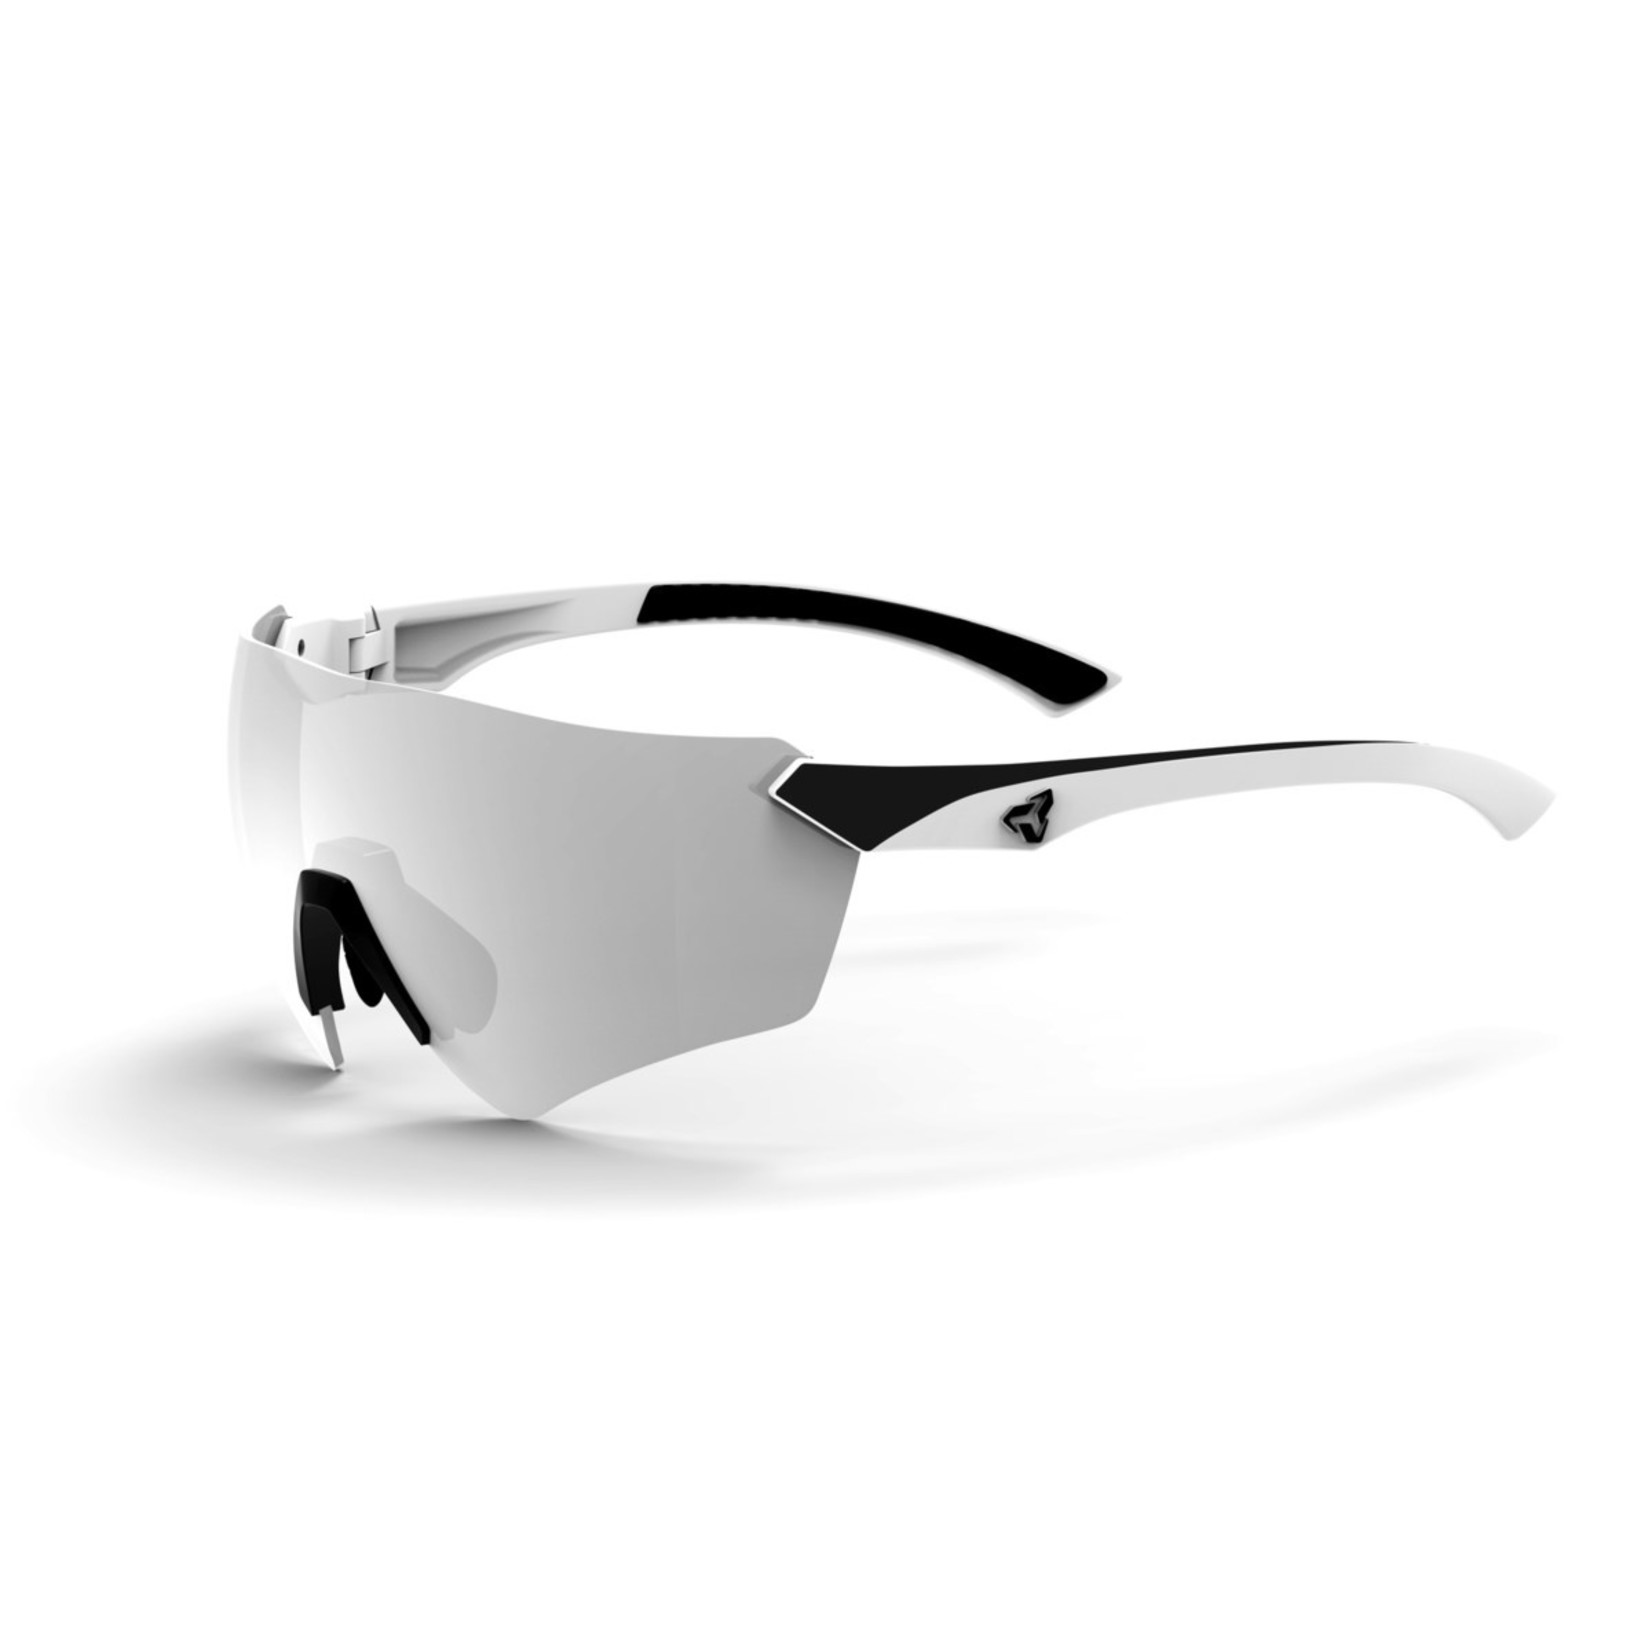 Ryders Eyewear Ryders Main Anti-Fog  Grey/Silver Mirror Lens White/Black Frame